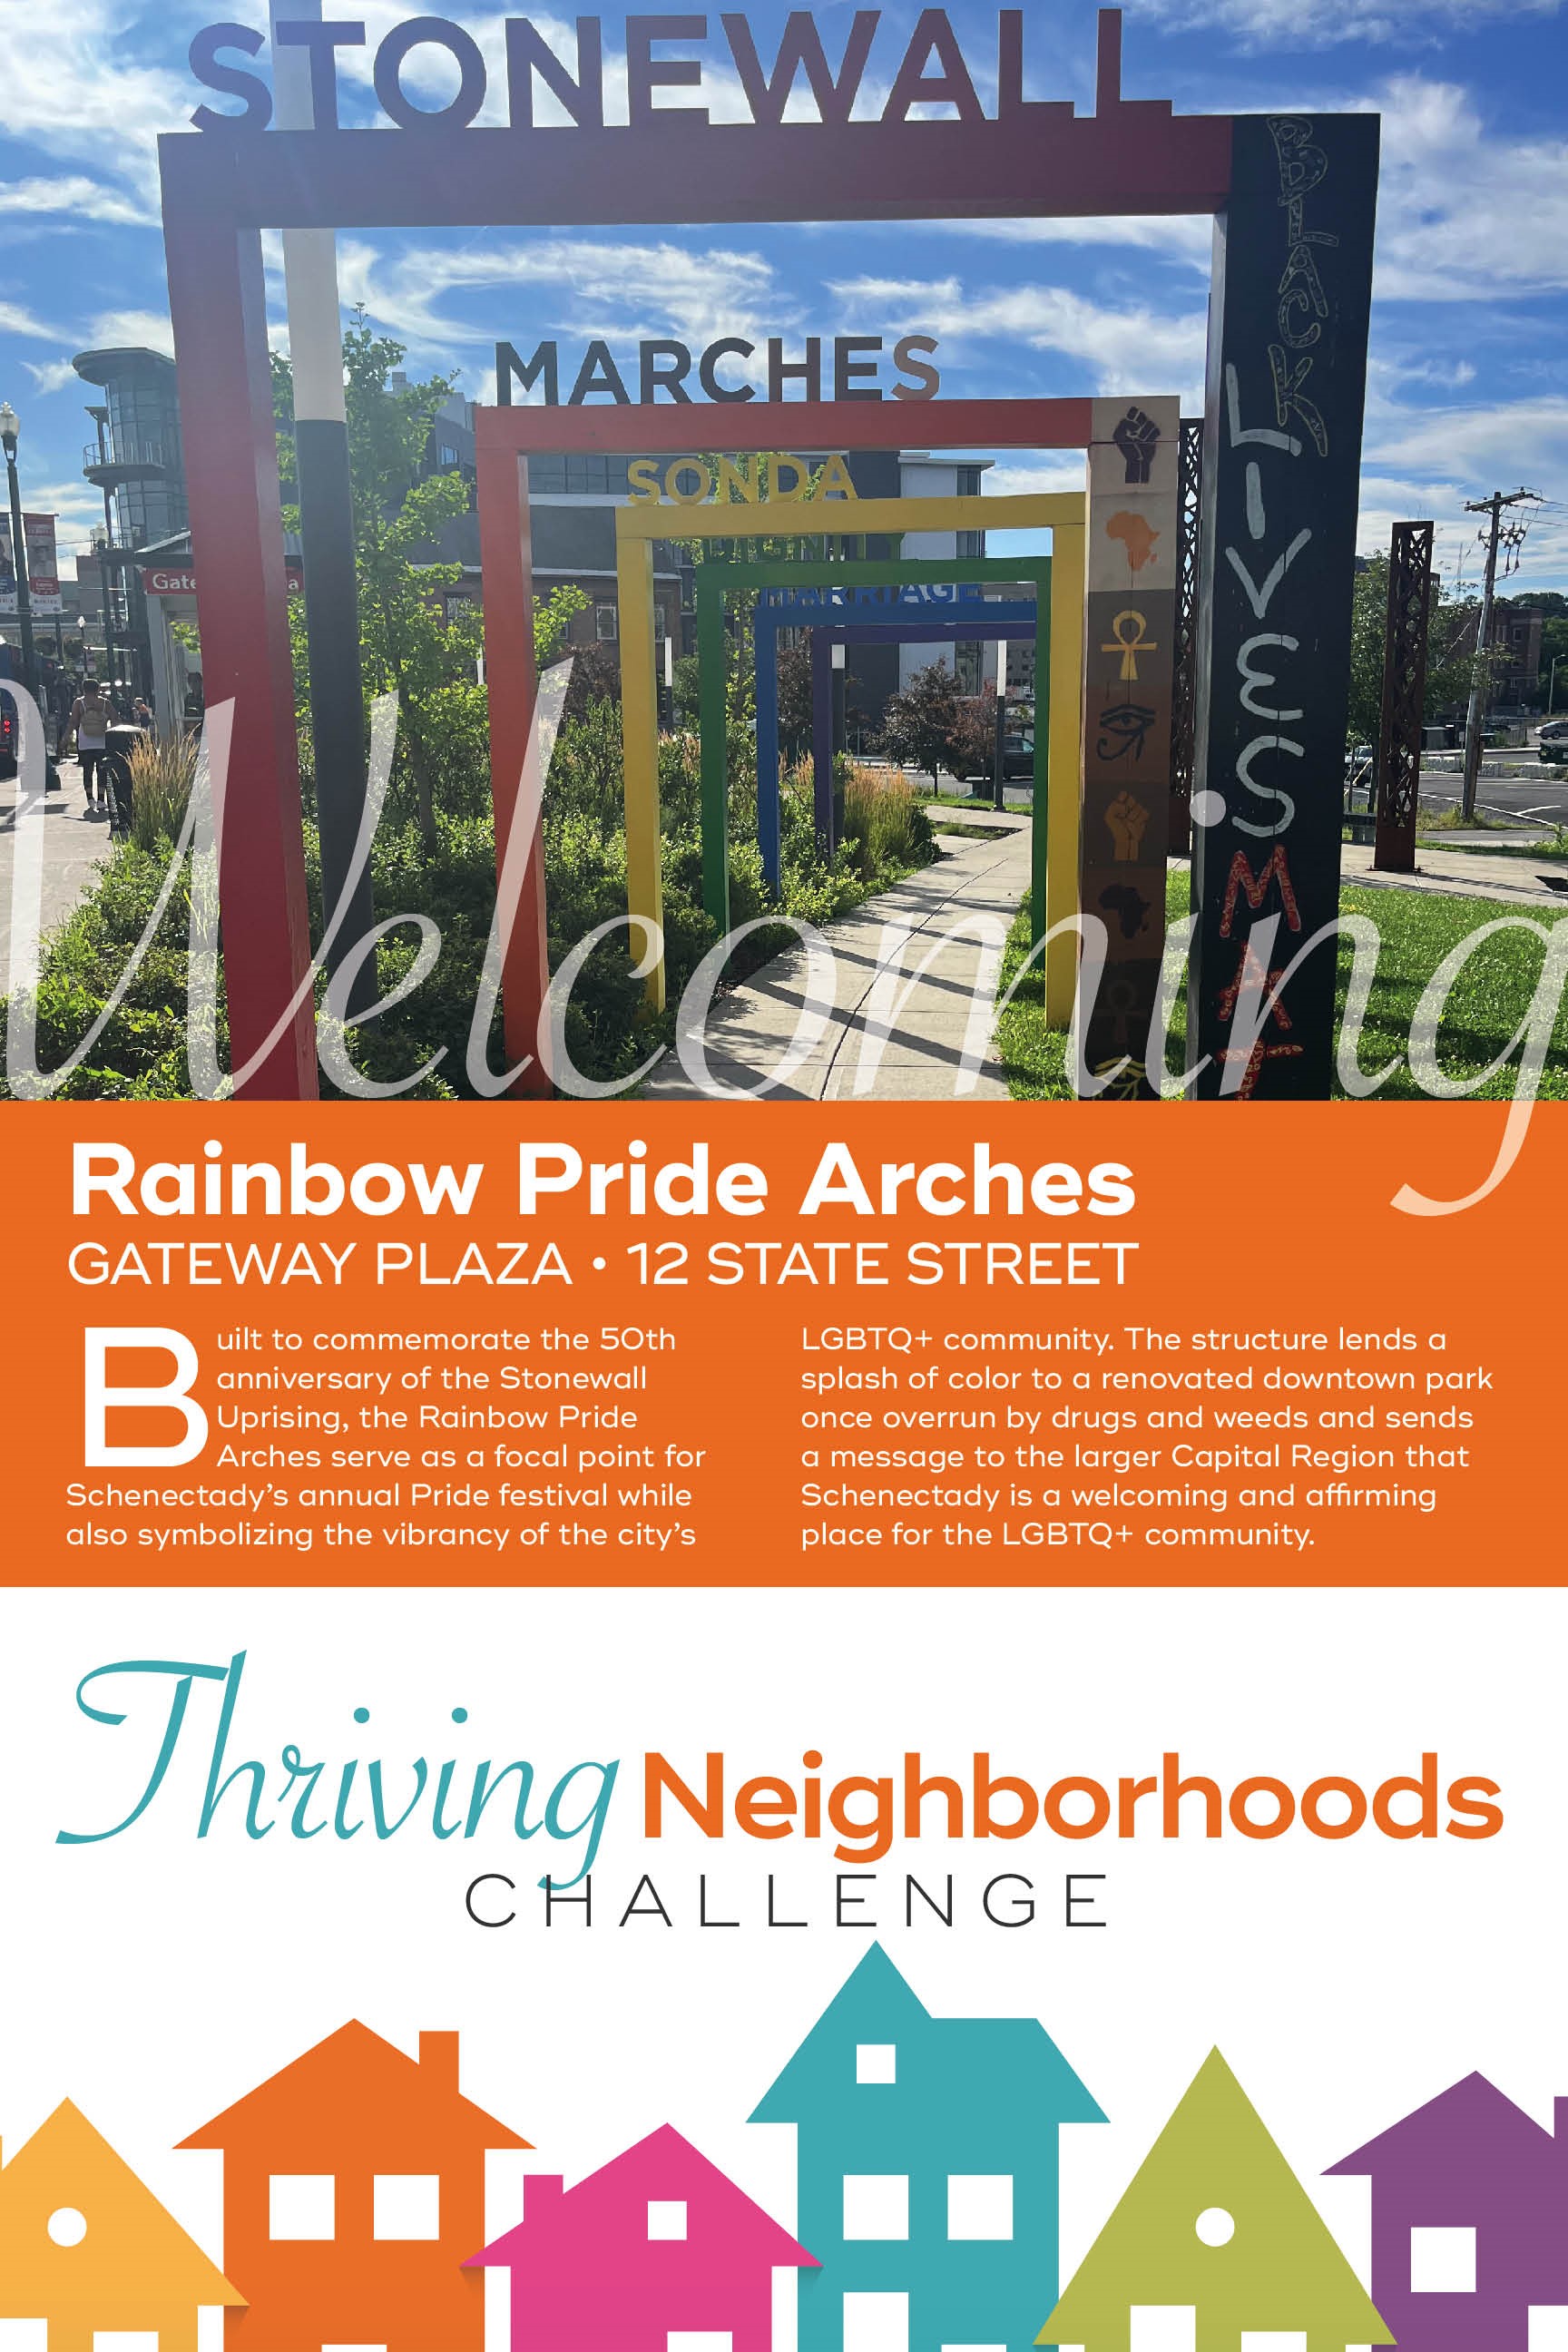 Uploaded Image: /vs-uploads/thrivingchallenge/TNC - Rainbow Pride Arches Board.jpg